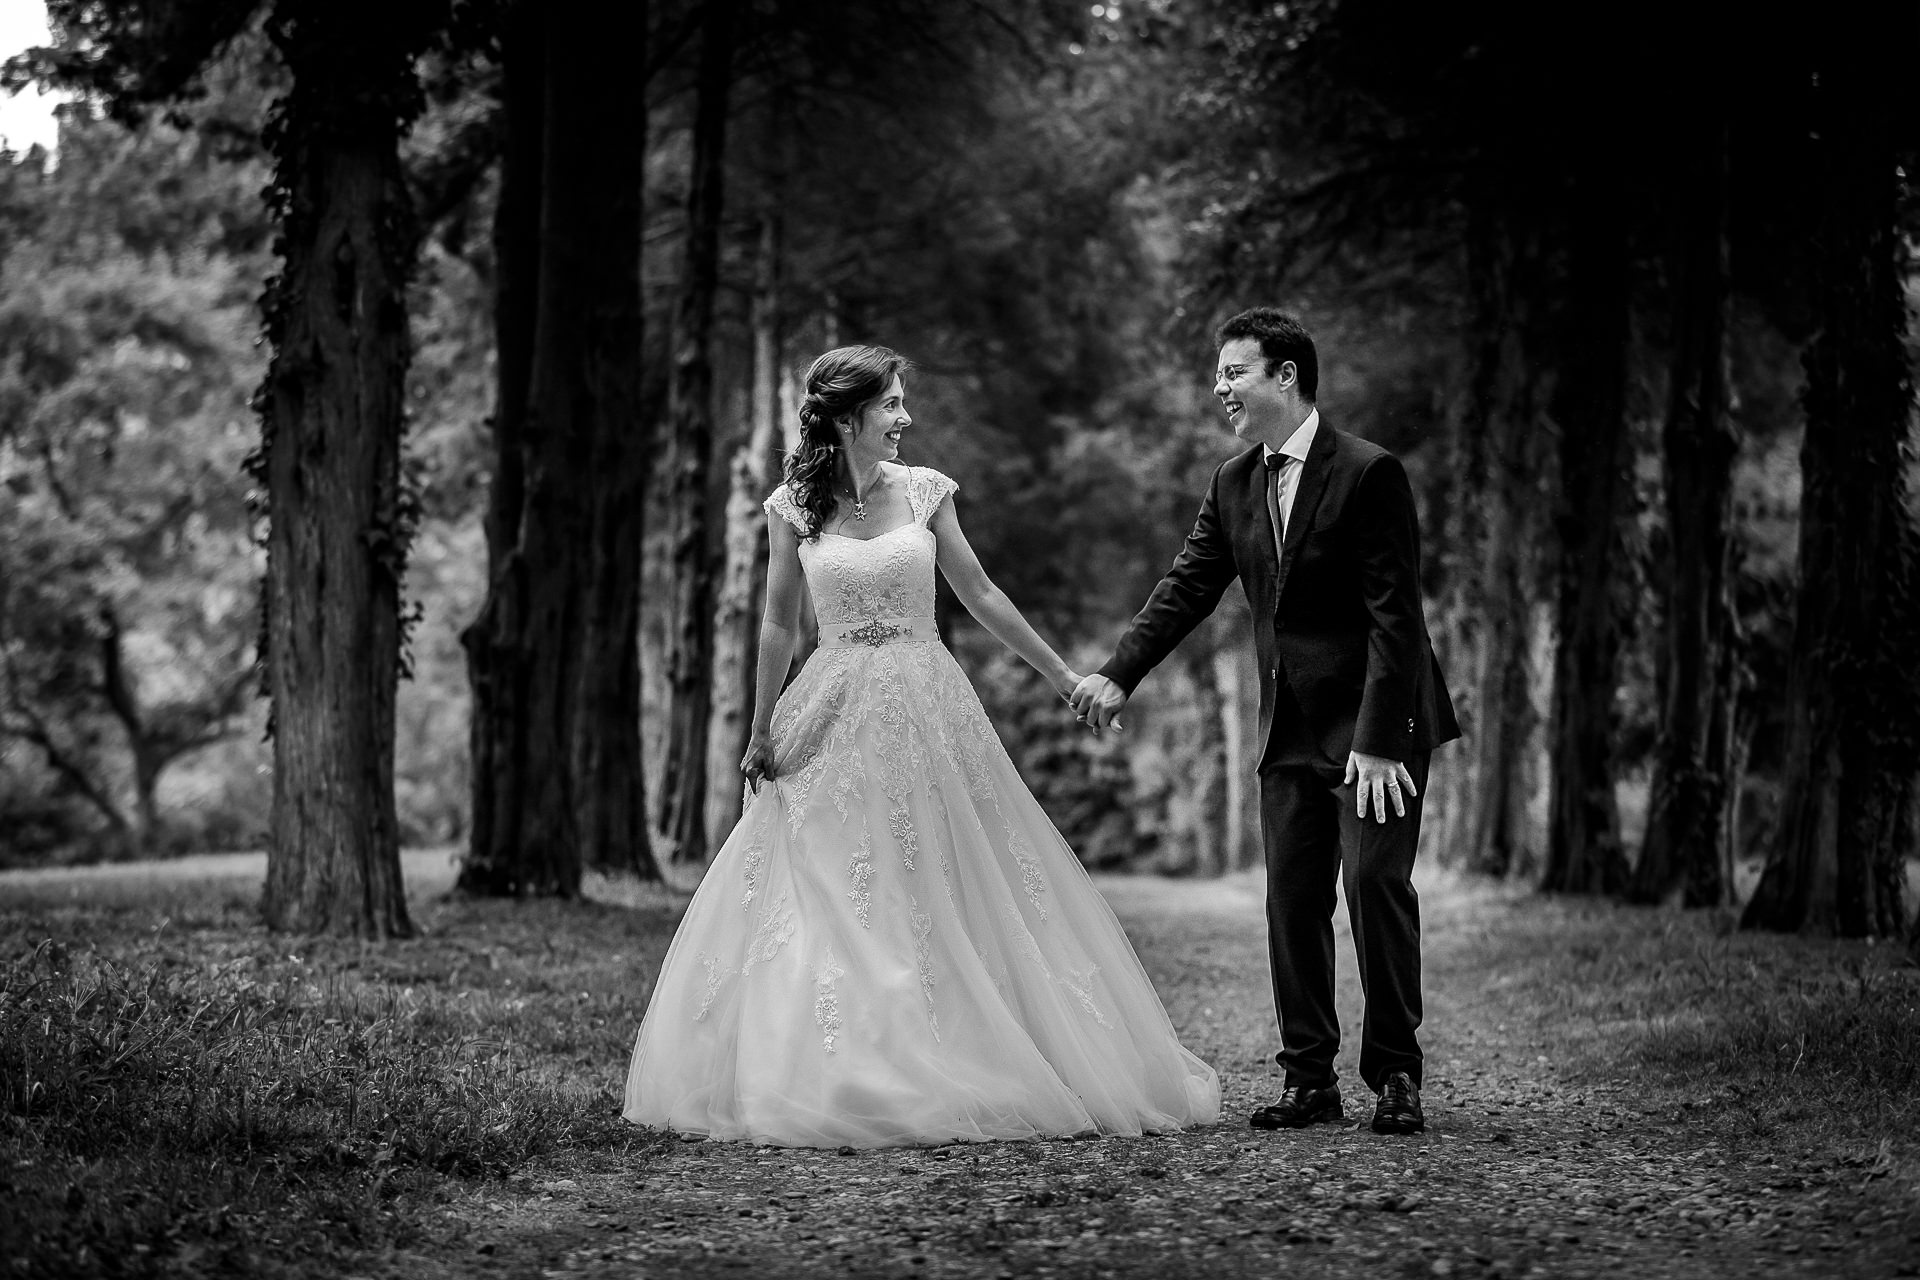 After wedding session - Buftea, Romania - Mihai Zaharia Photography - Destination wedding photographer - 03